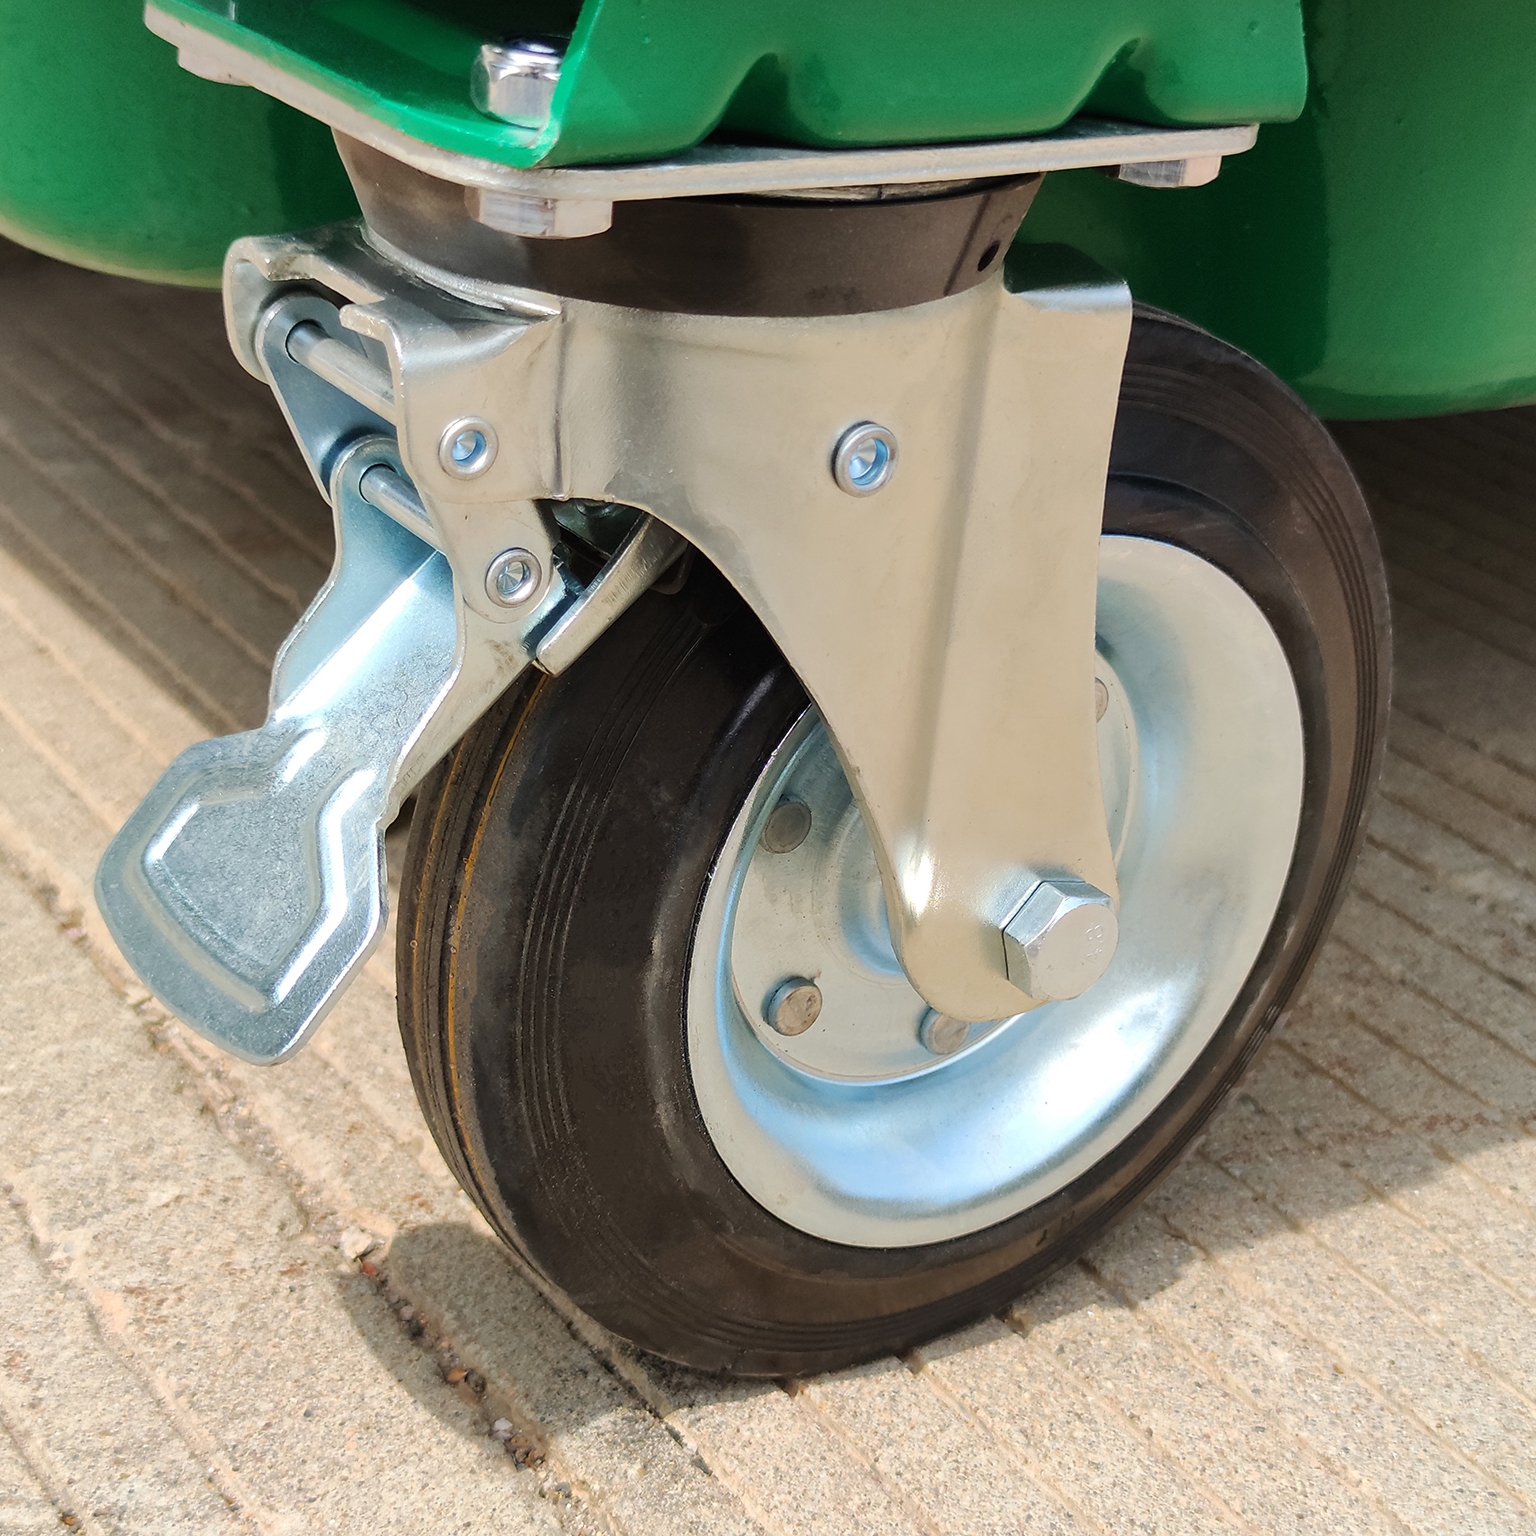 Industrial heavy duty 8 inch rubber casters wheel with Brackets